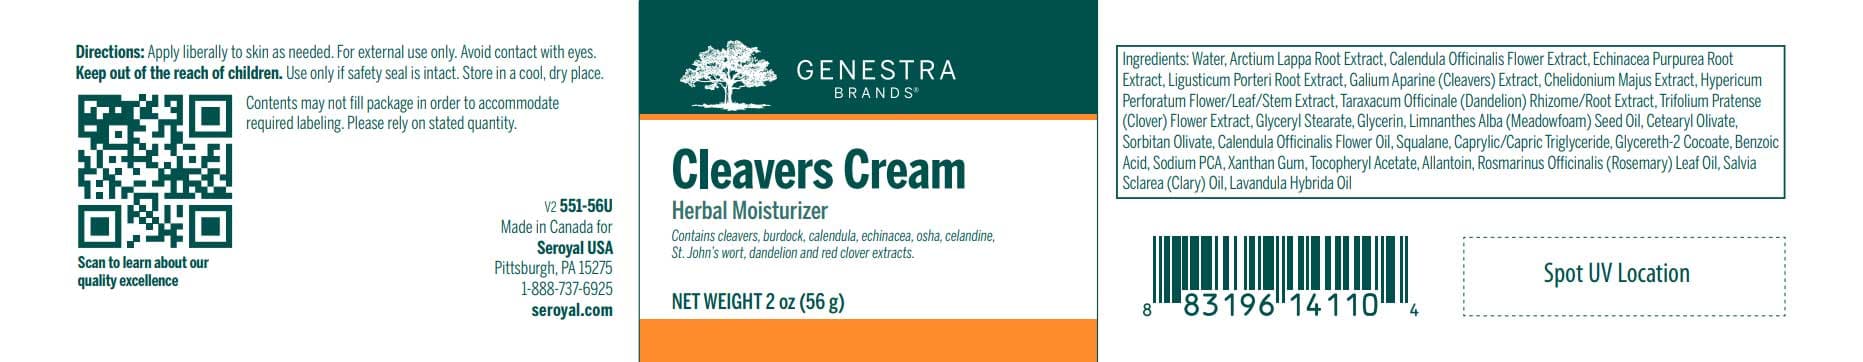 Genestra Brands Cleavers Cream (Formerly Lymphagen Cream)  Label